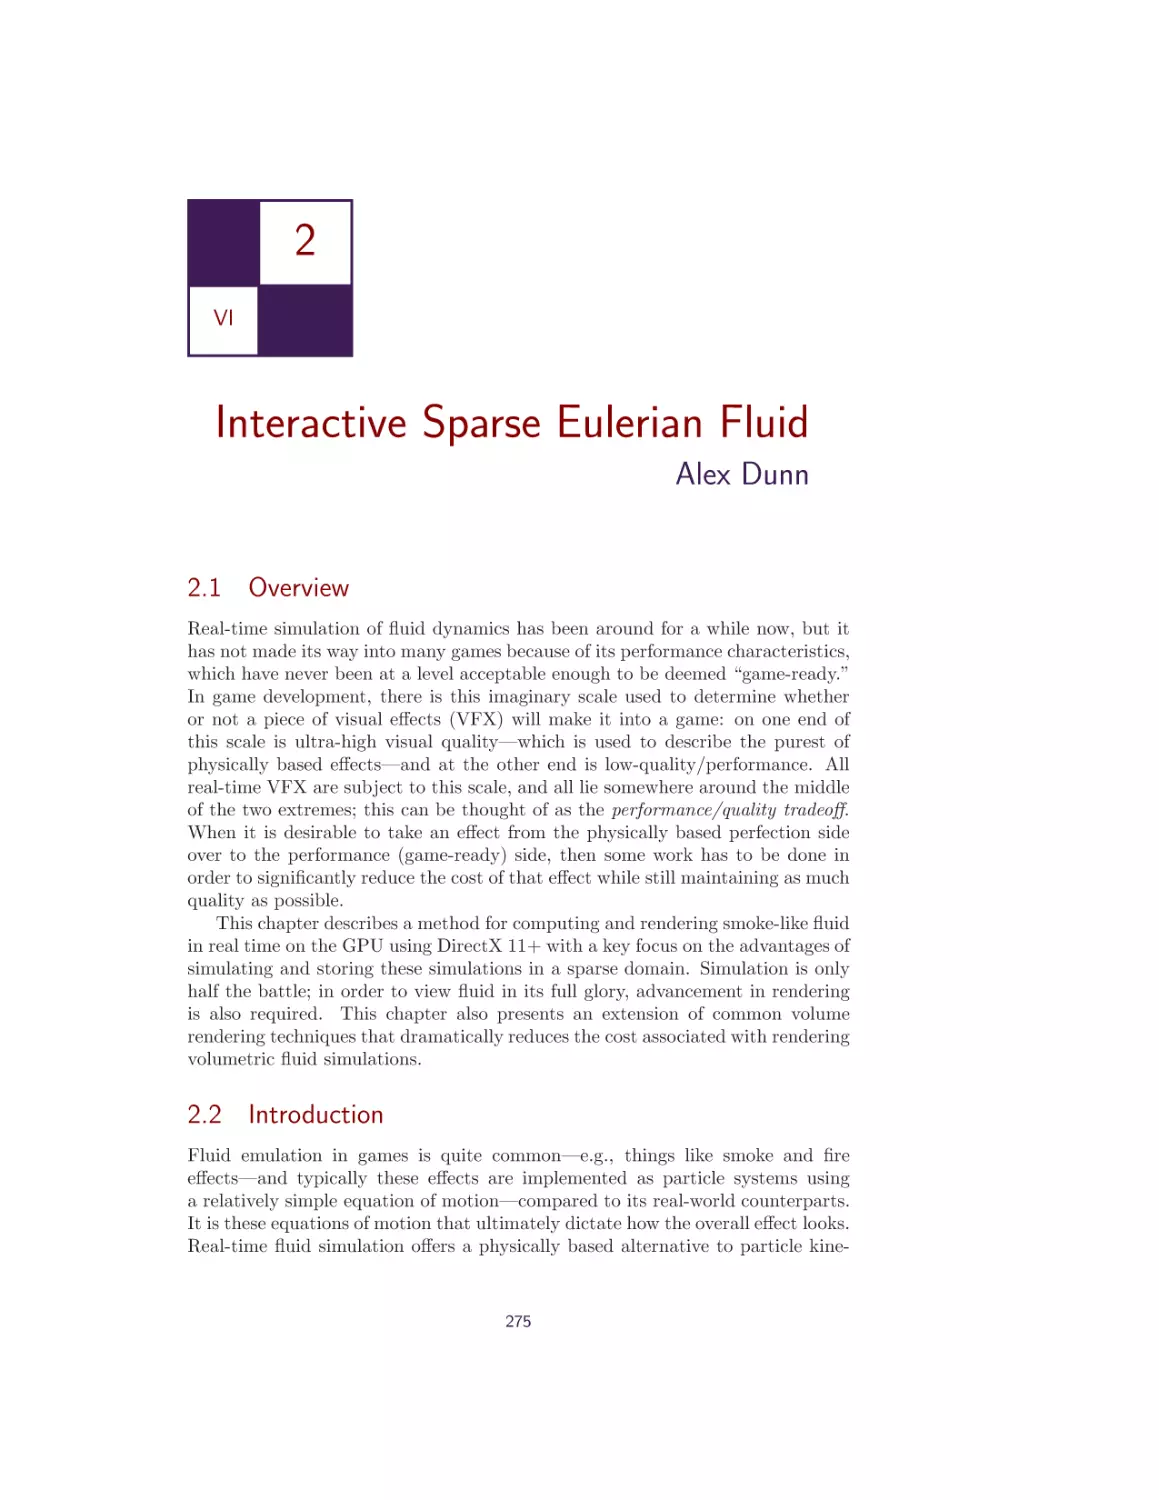 2. Interactive Sparse Eulerian Fluid